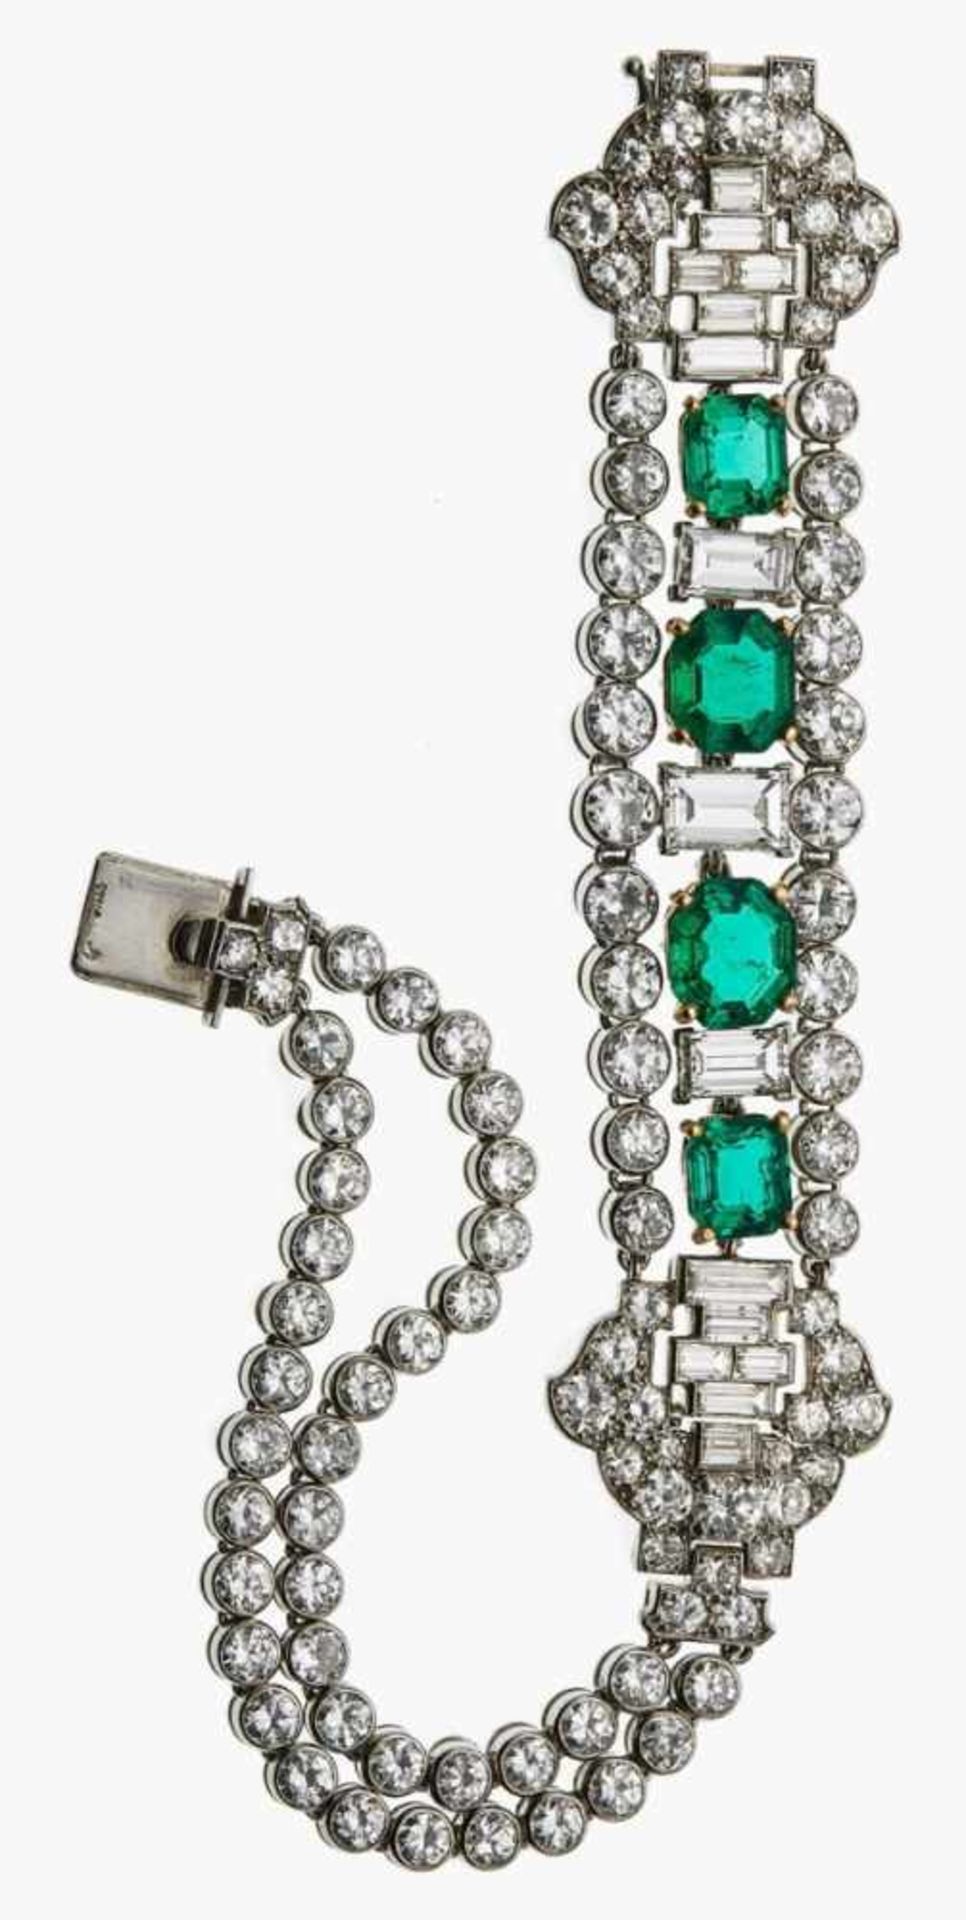 Diamant-Smaragd-ArmbandCartier London um 1930 Platin. Mittelteil besetzt mit 4 Smaragden, 15